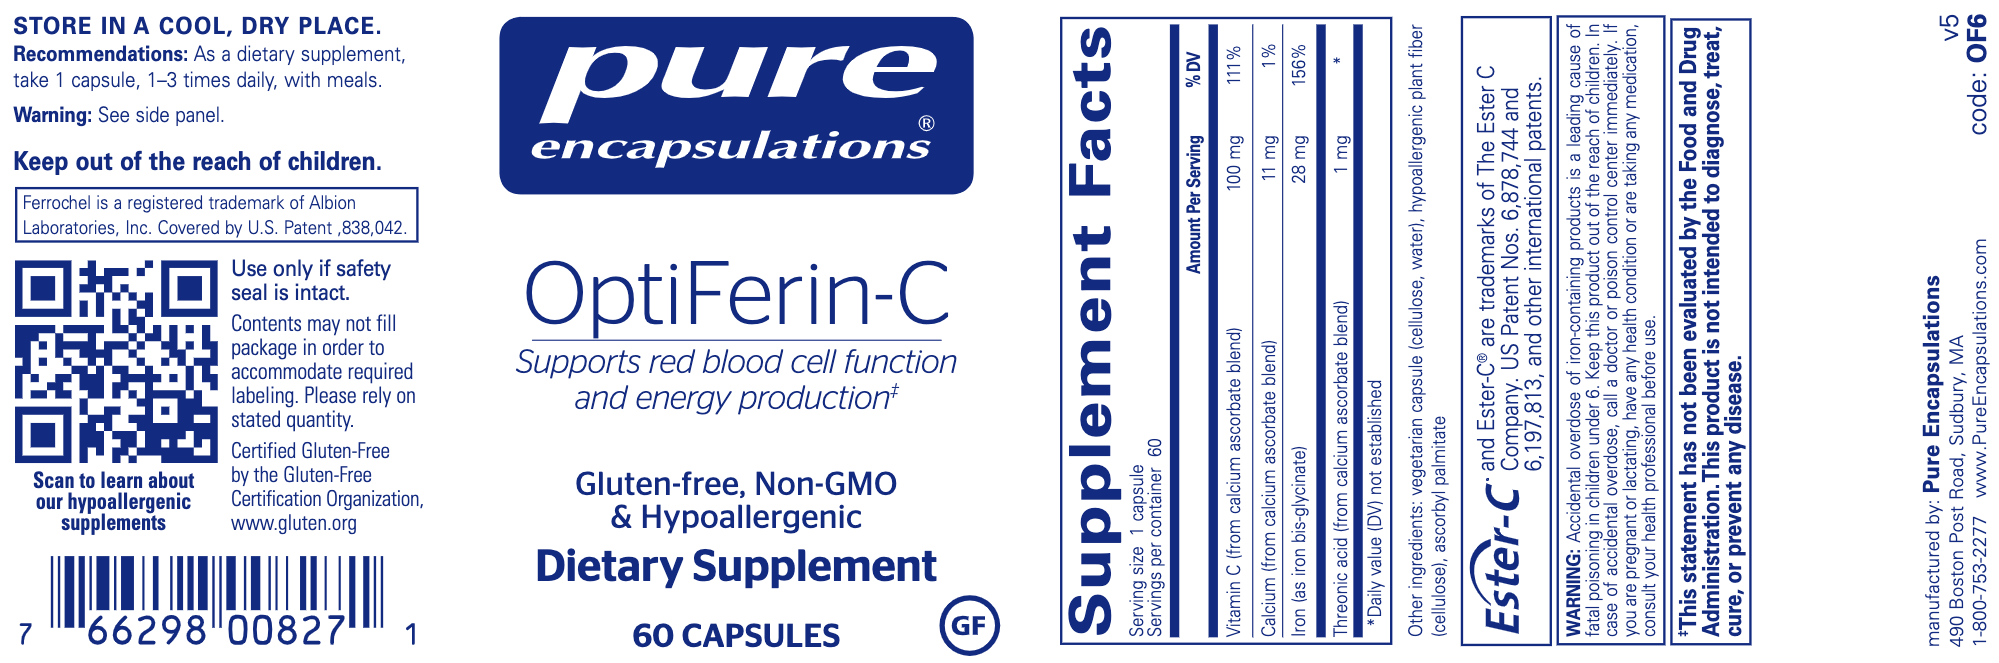 OptiFerin-C (60 Capsules)-Pure Encapsulations-Pine Street Clinic